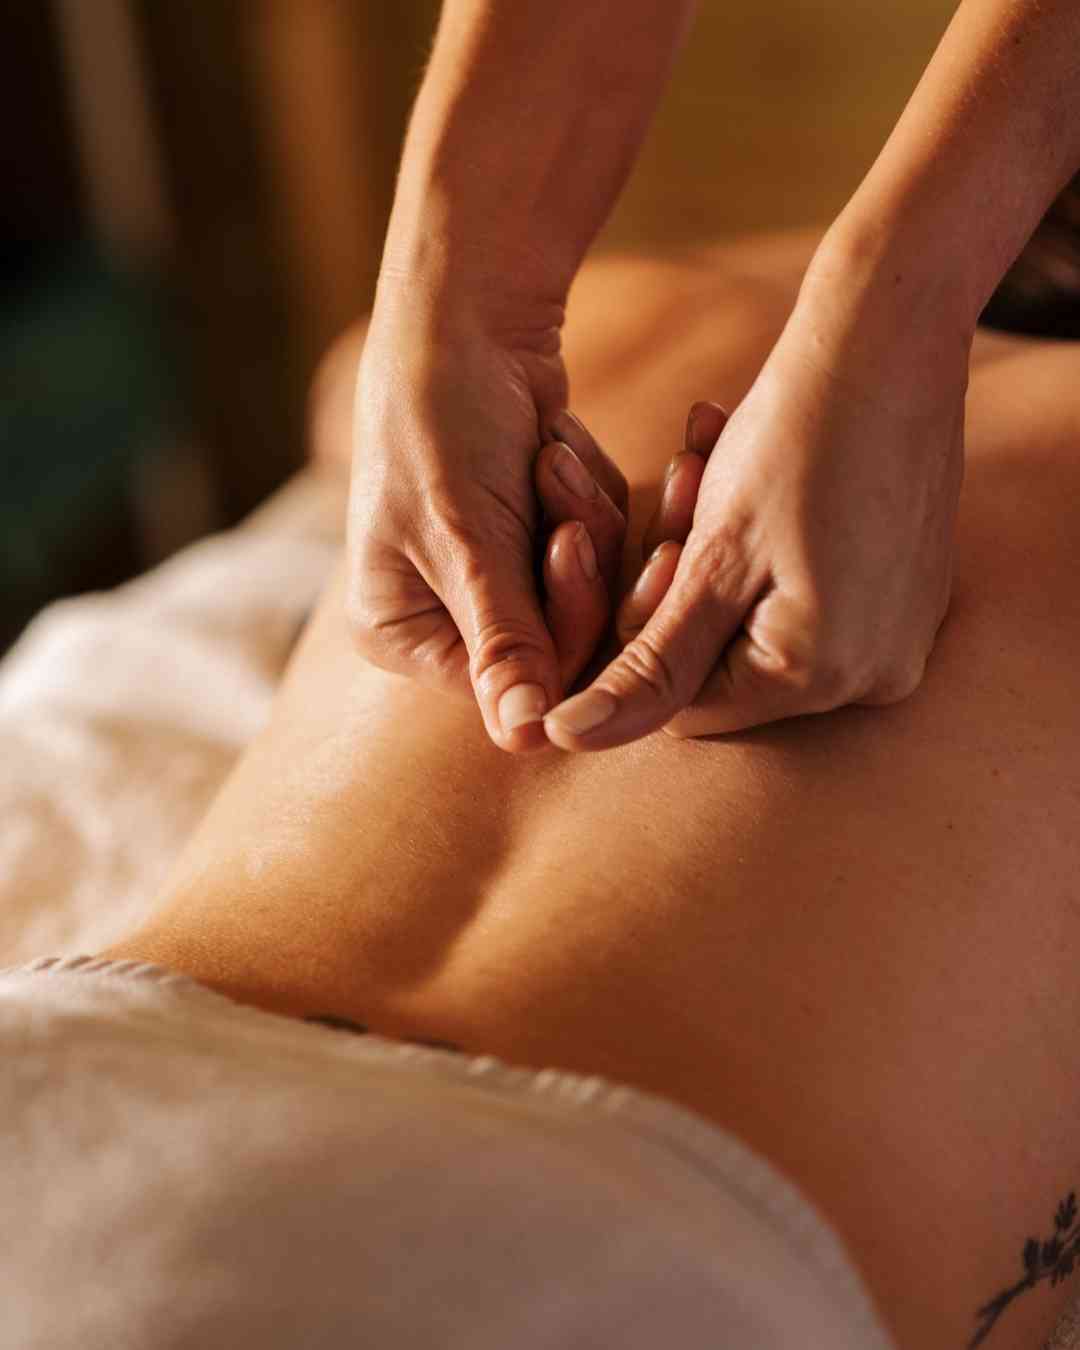 diky dm add photo male female naturist massage